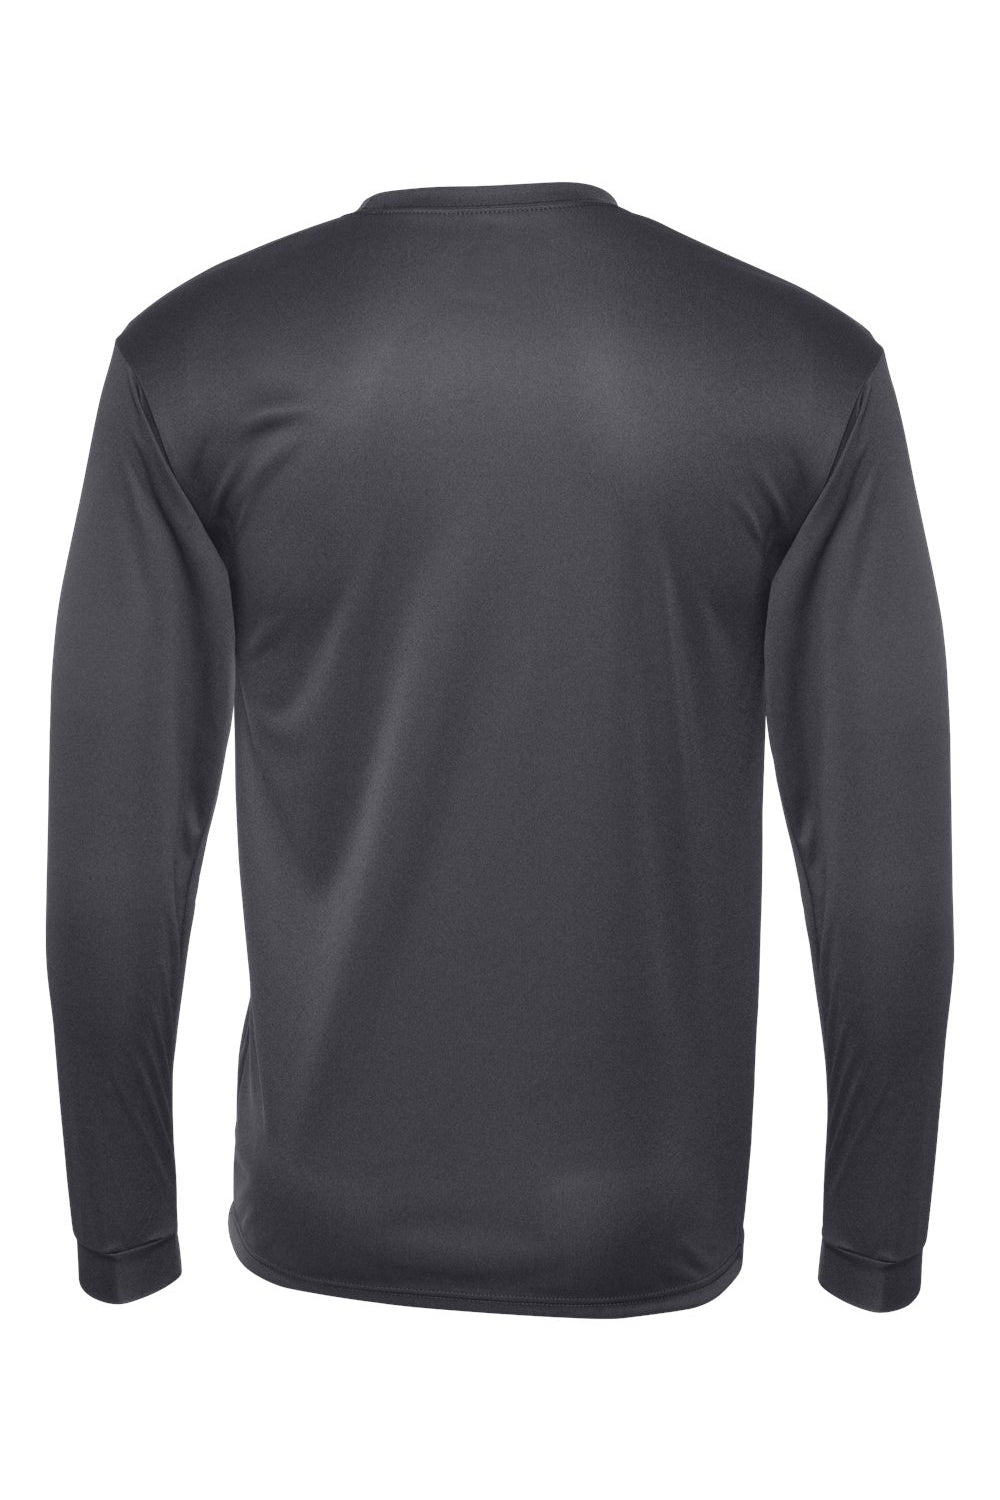 C2 Sport 5104 Mens Performance Moisture Wicking Long Sleeve Crewneck T-Shirt Graphite Grey Flat Back